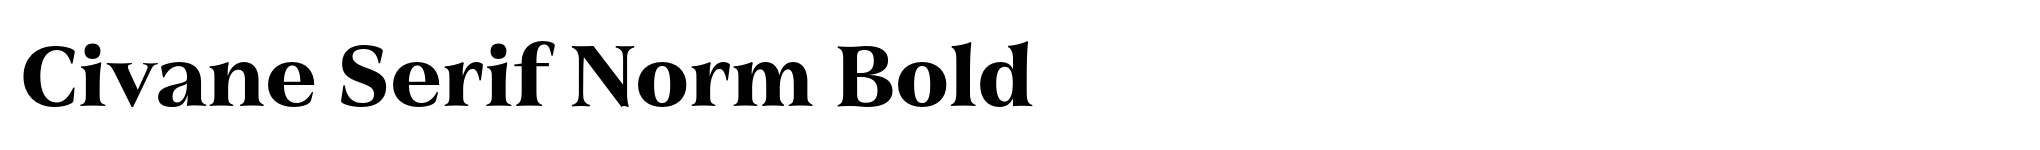 Civane Serif Norm Bold image